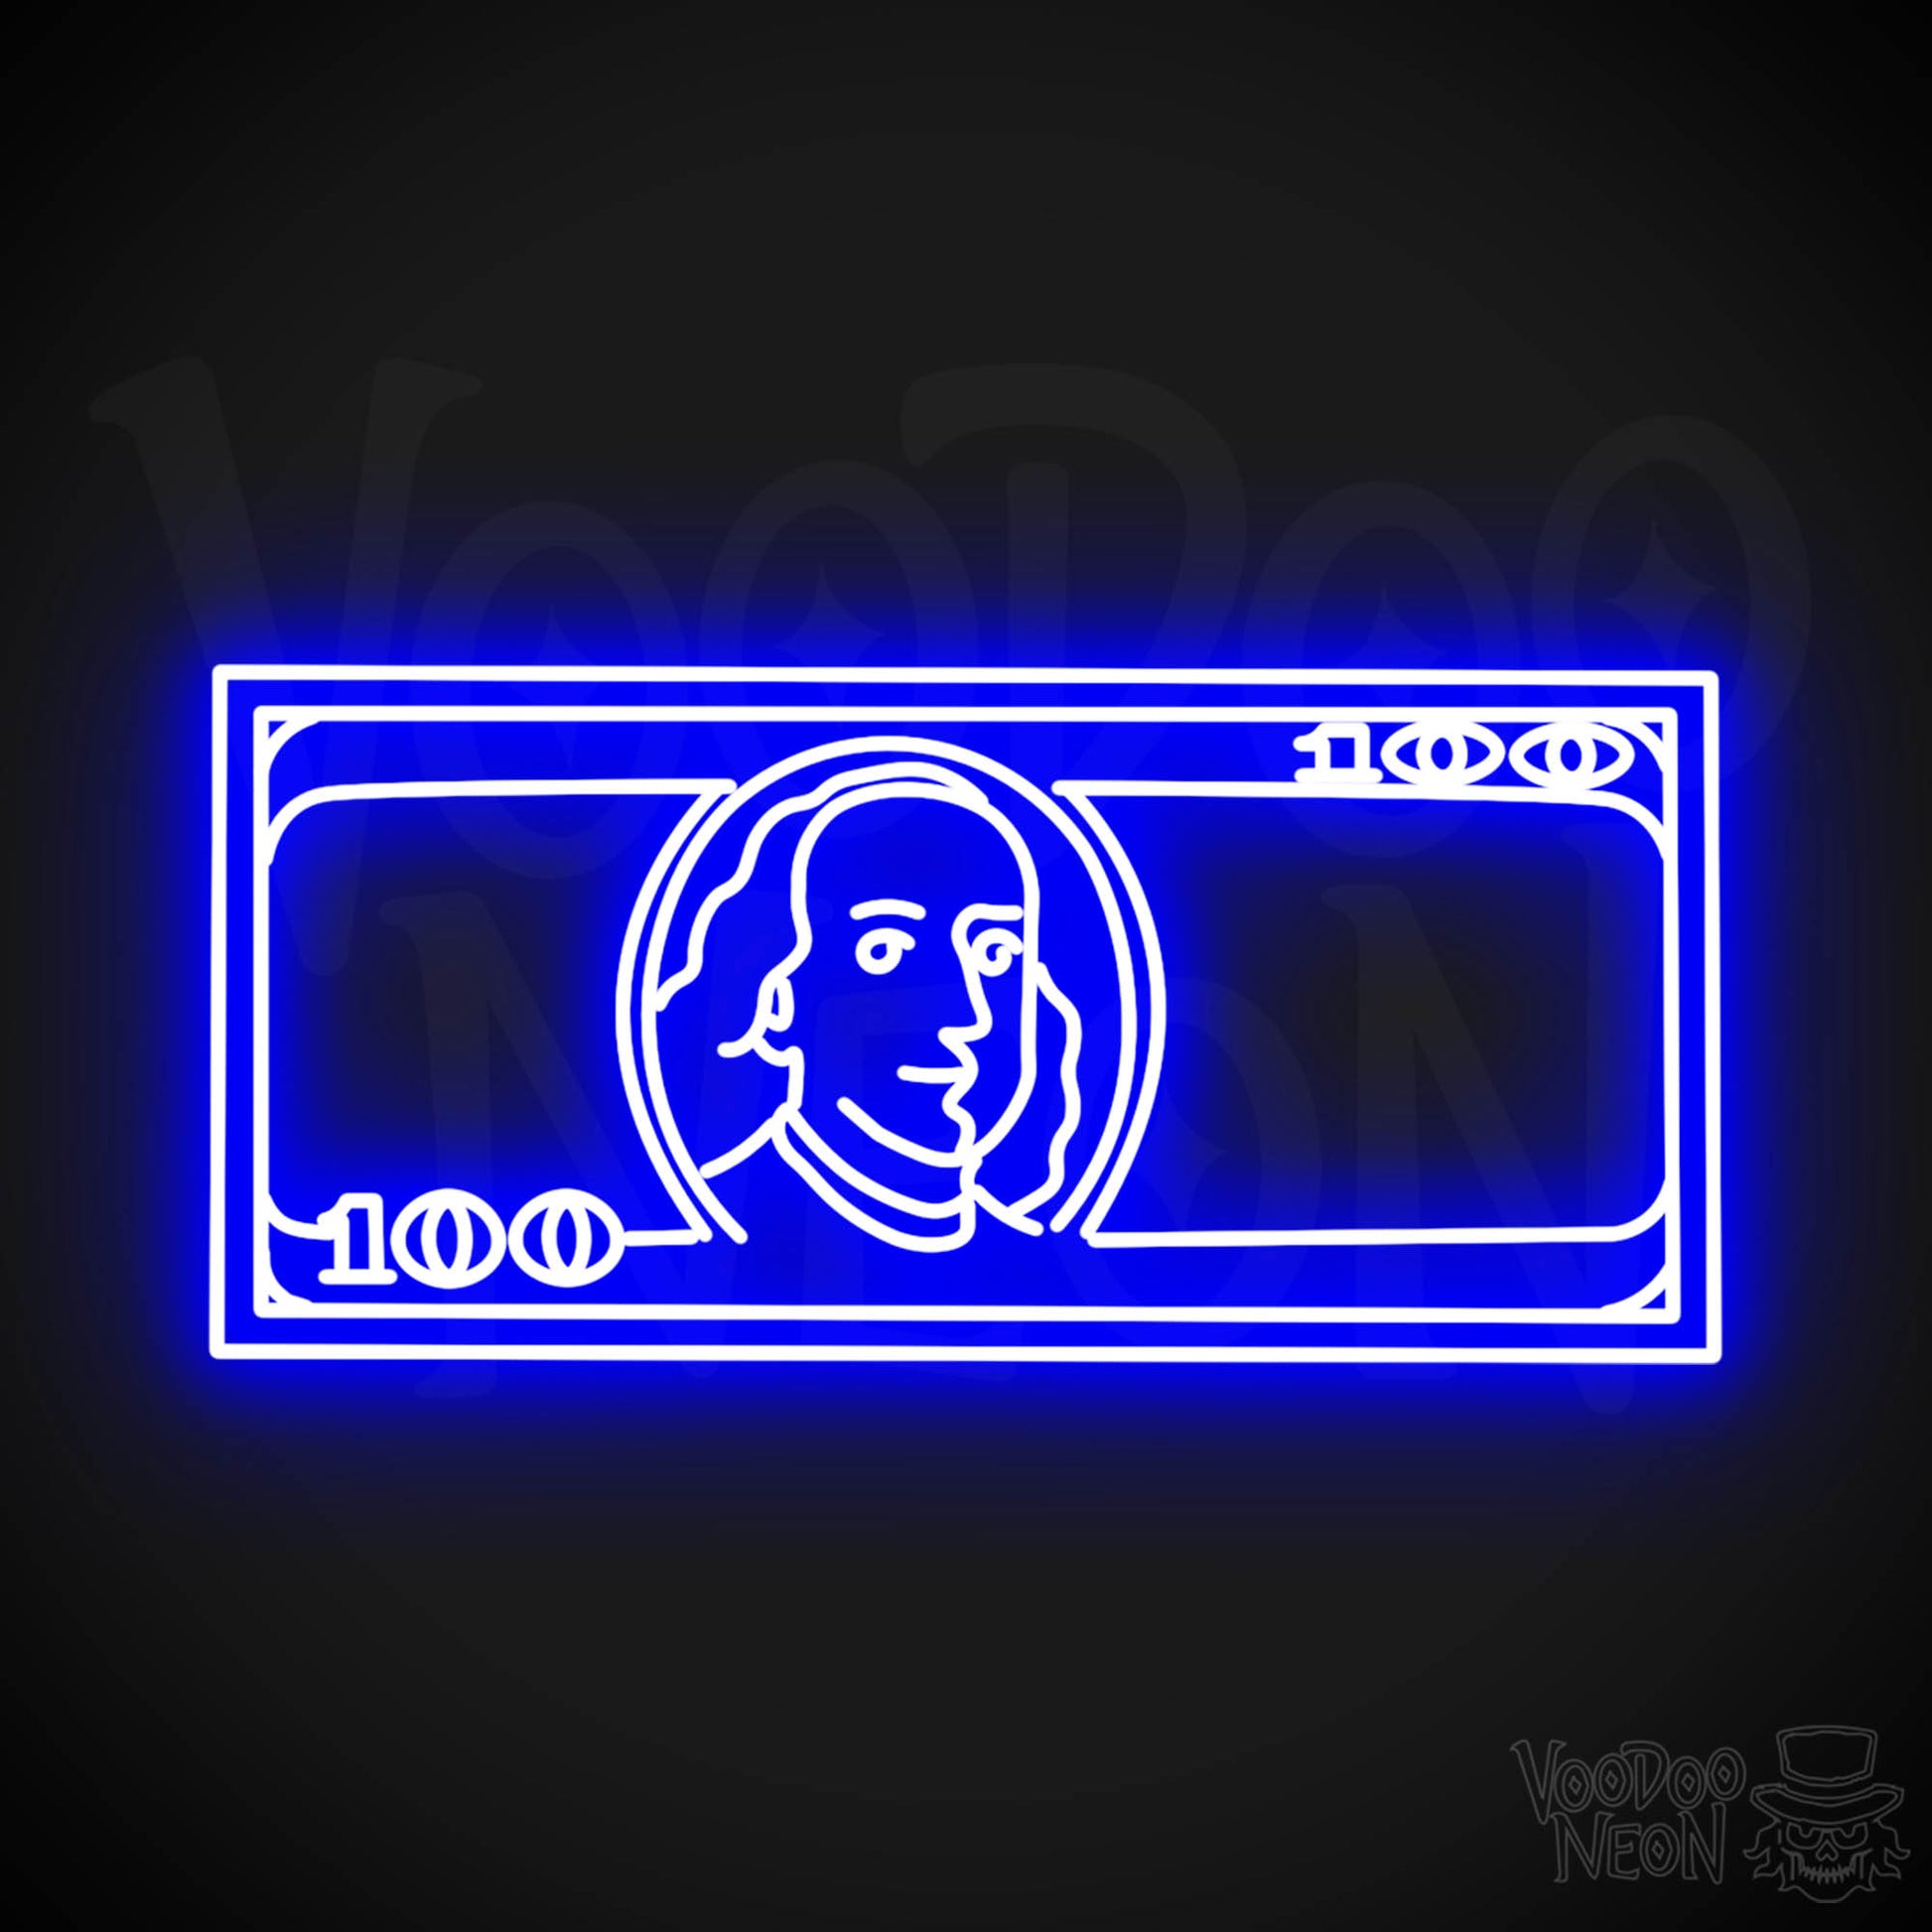 US $100 Bill Neon Sign - Neon $100 Sign - Color Dark Blue